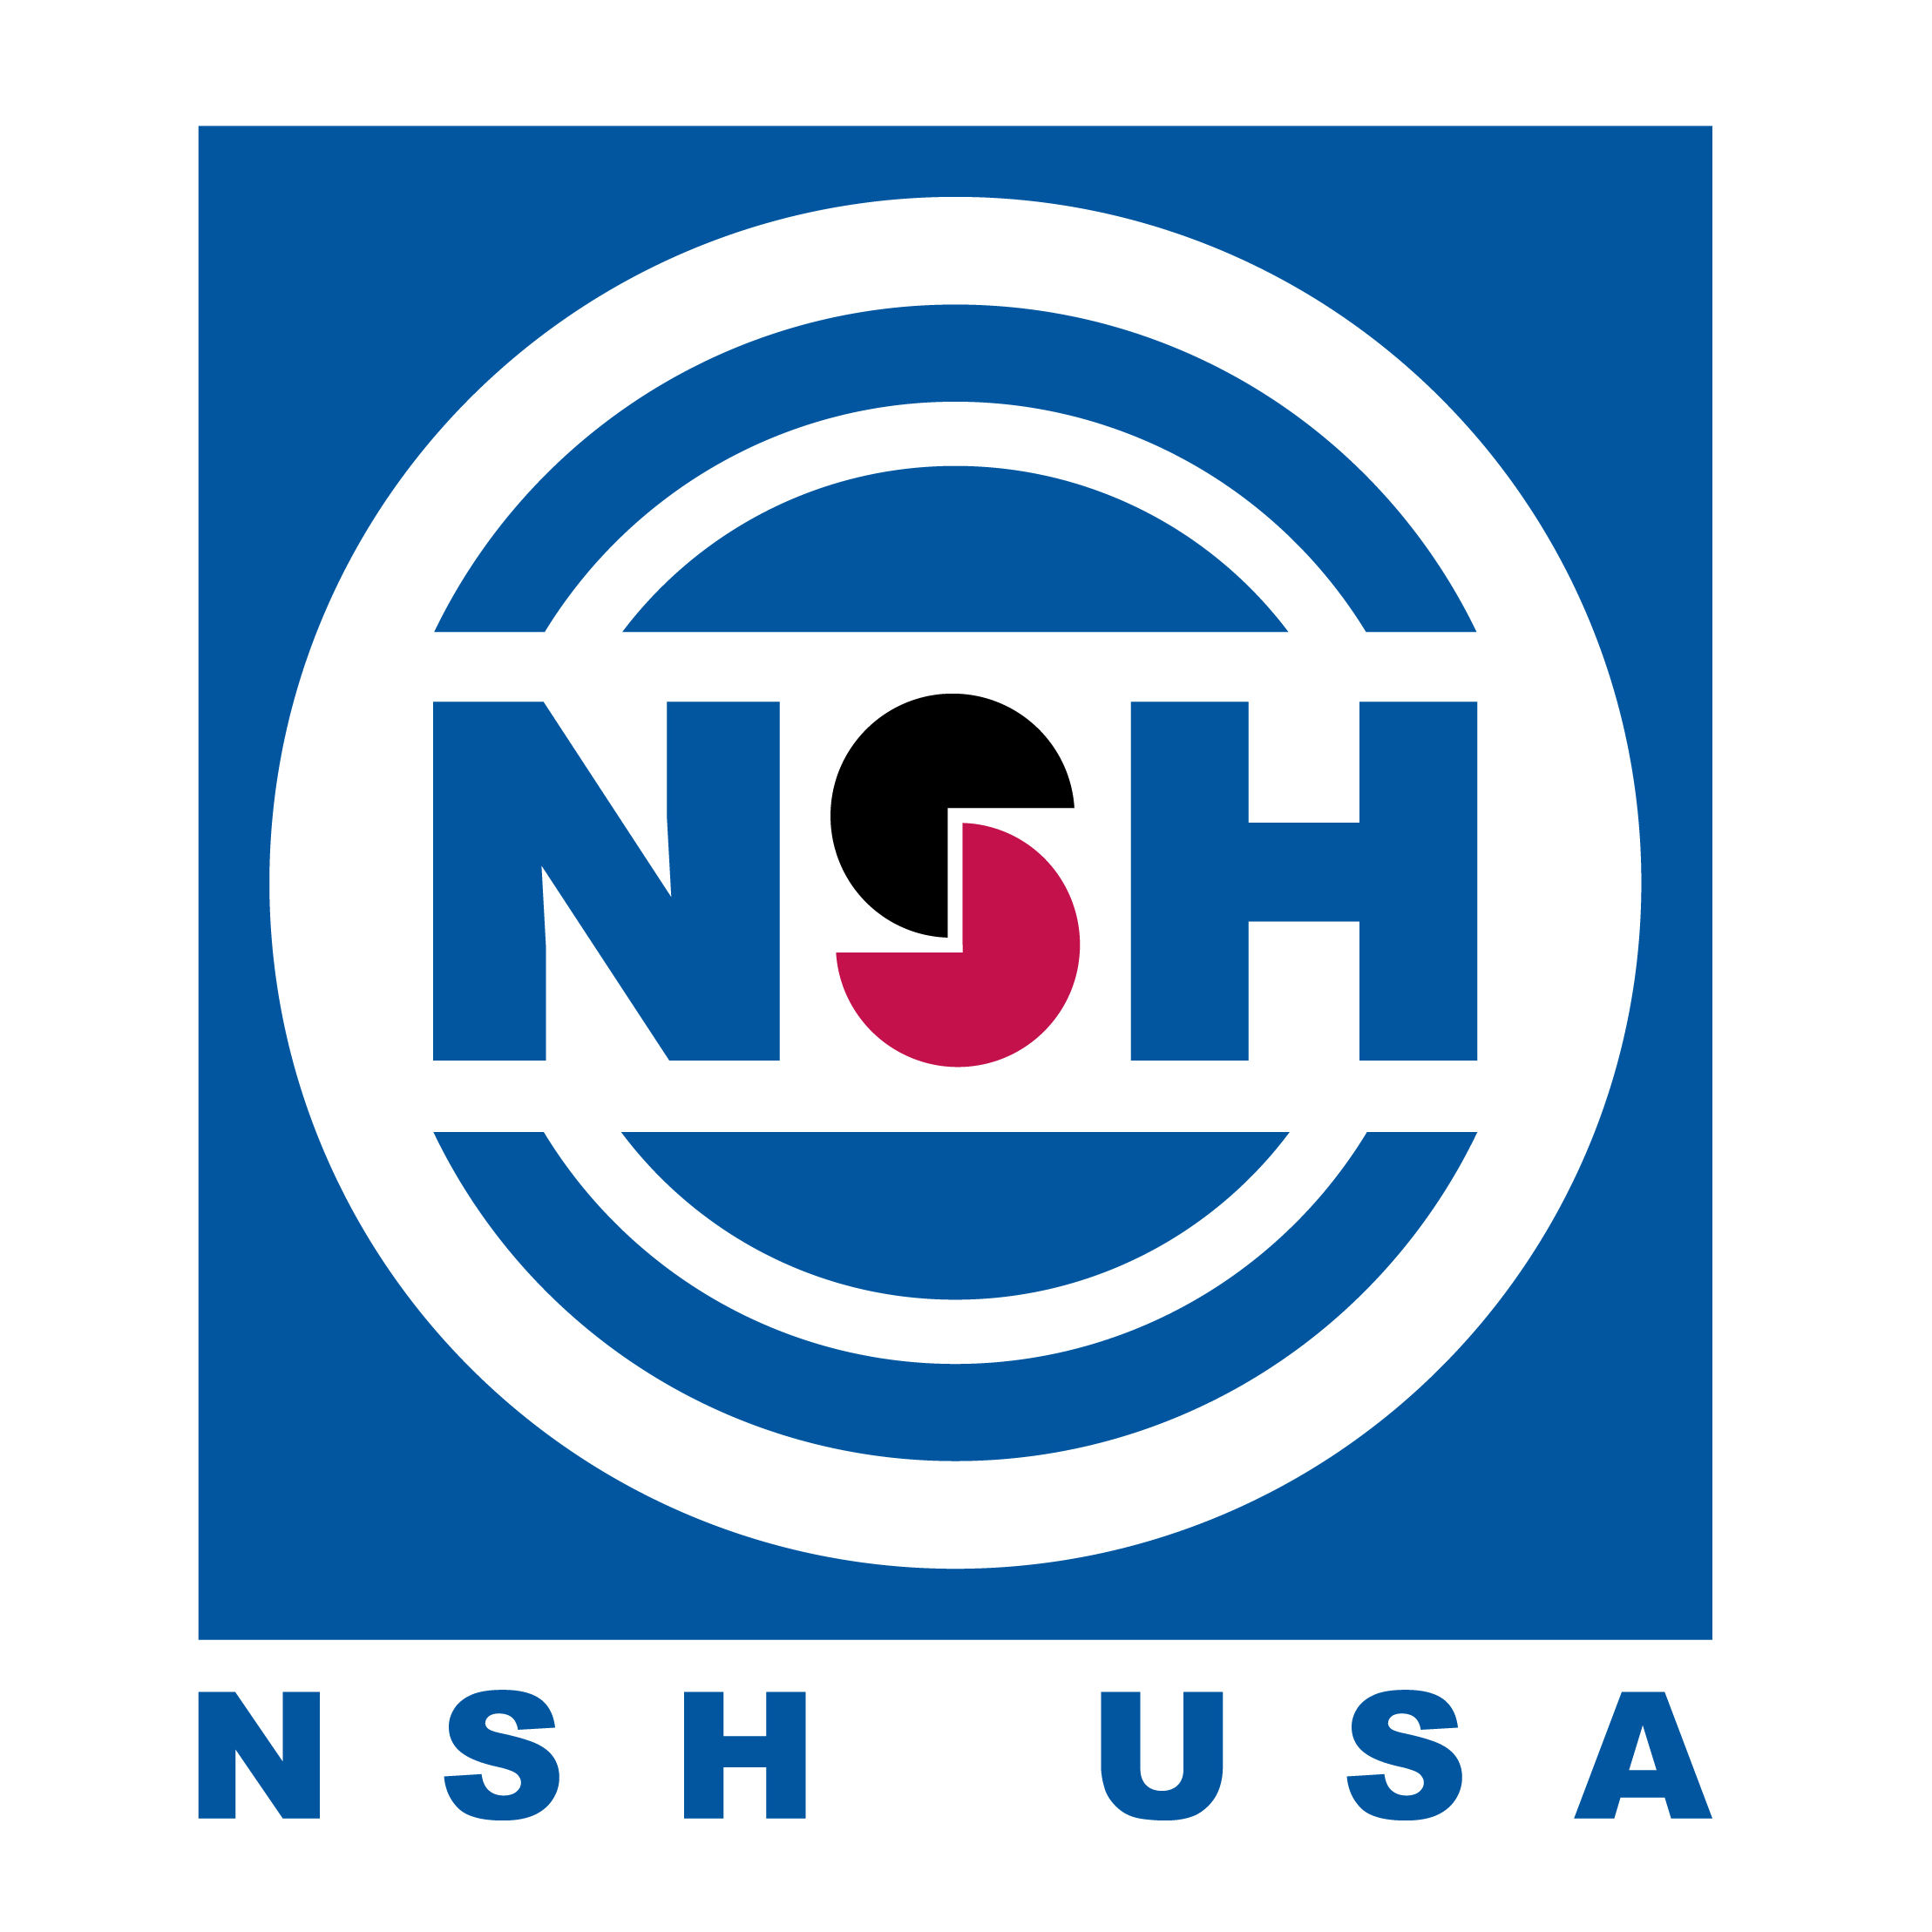 NSH USA Corporation